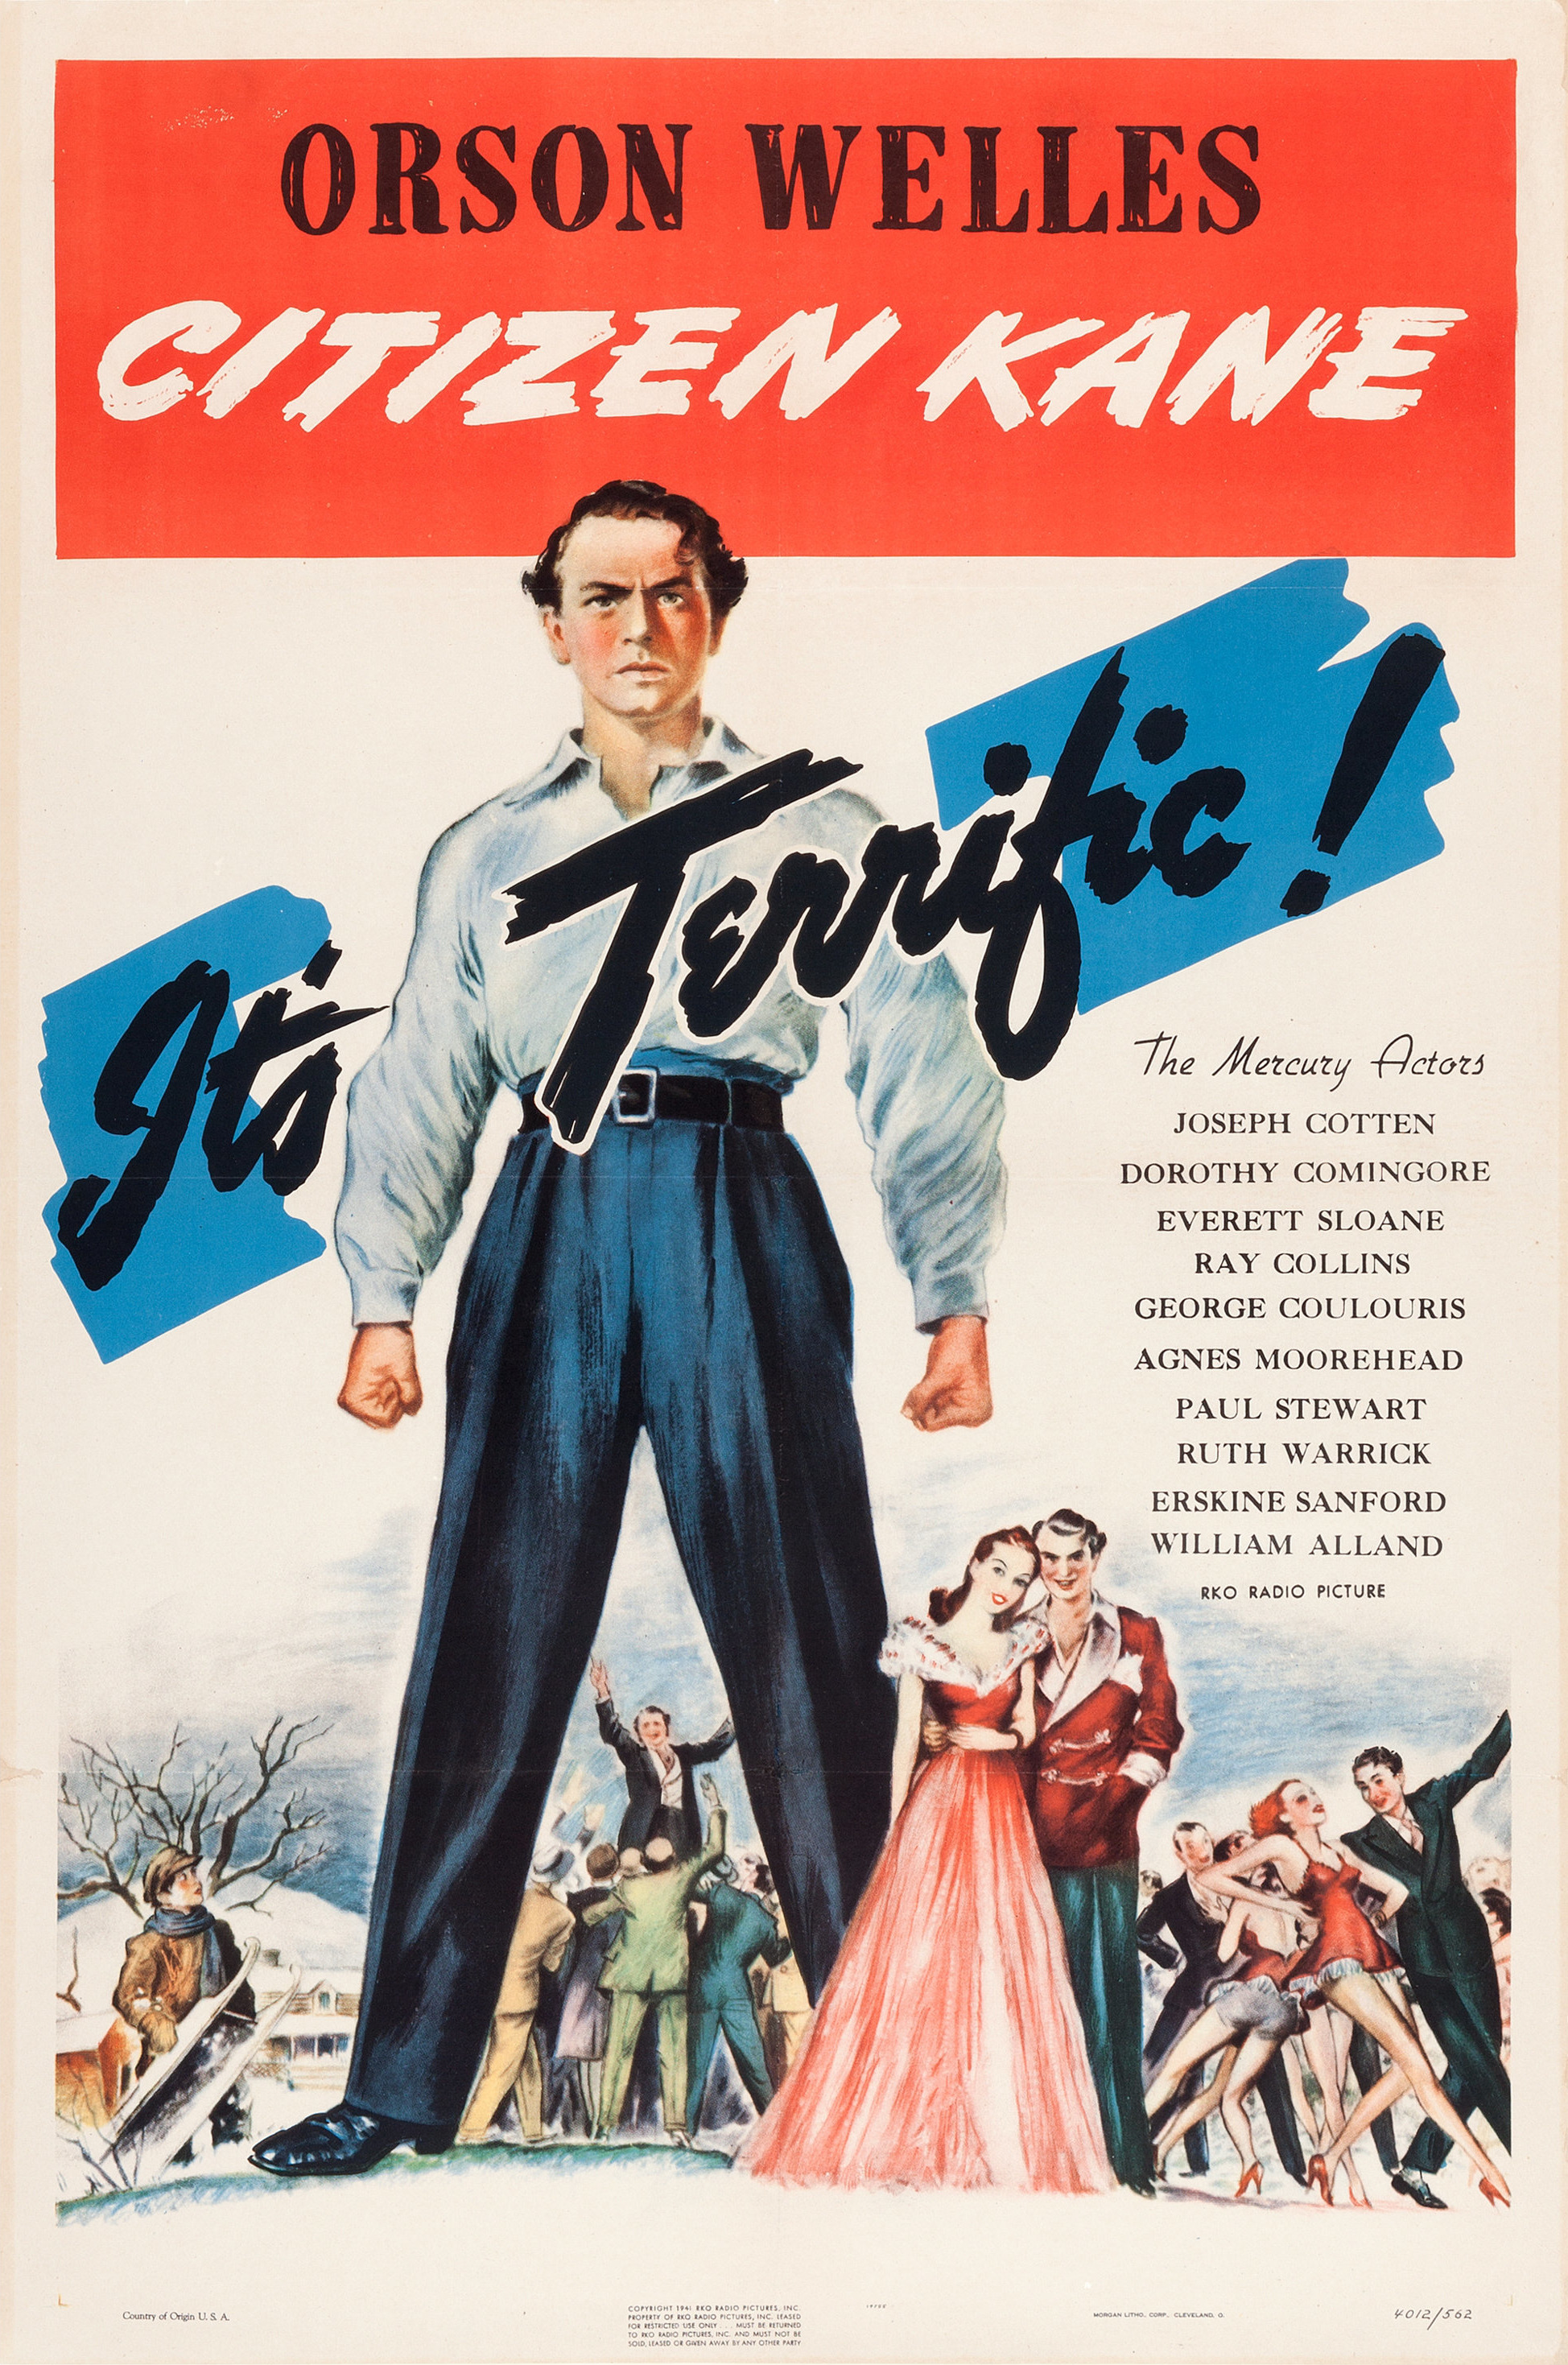 Mega Sized Movie Poster Image for Citizen Kane (#3 of 4)